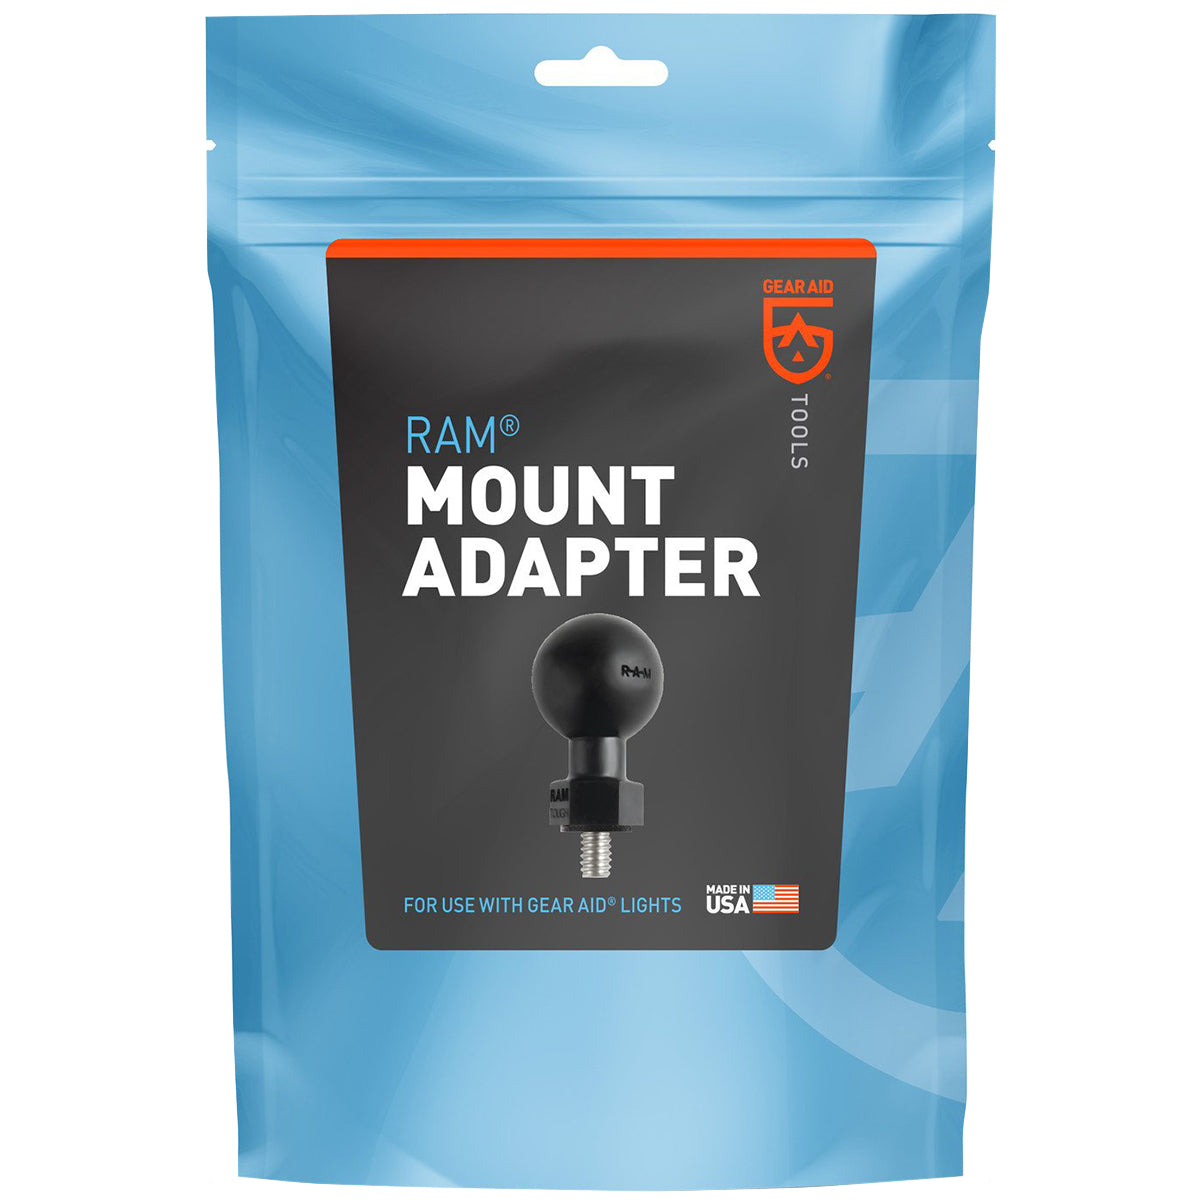 Gear Aid RAM Light Mount Adapter - 2-Pack Gear Aid